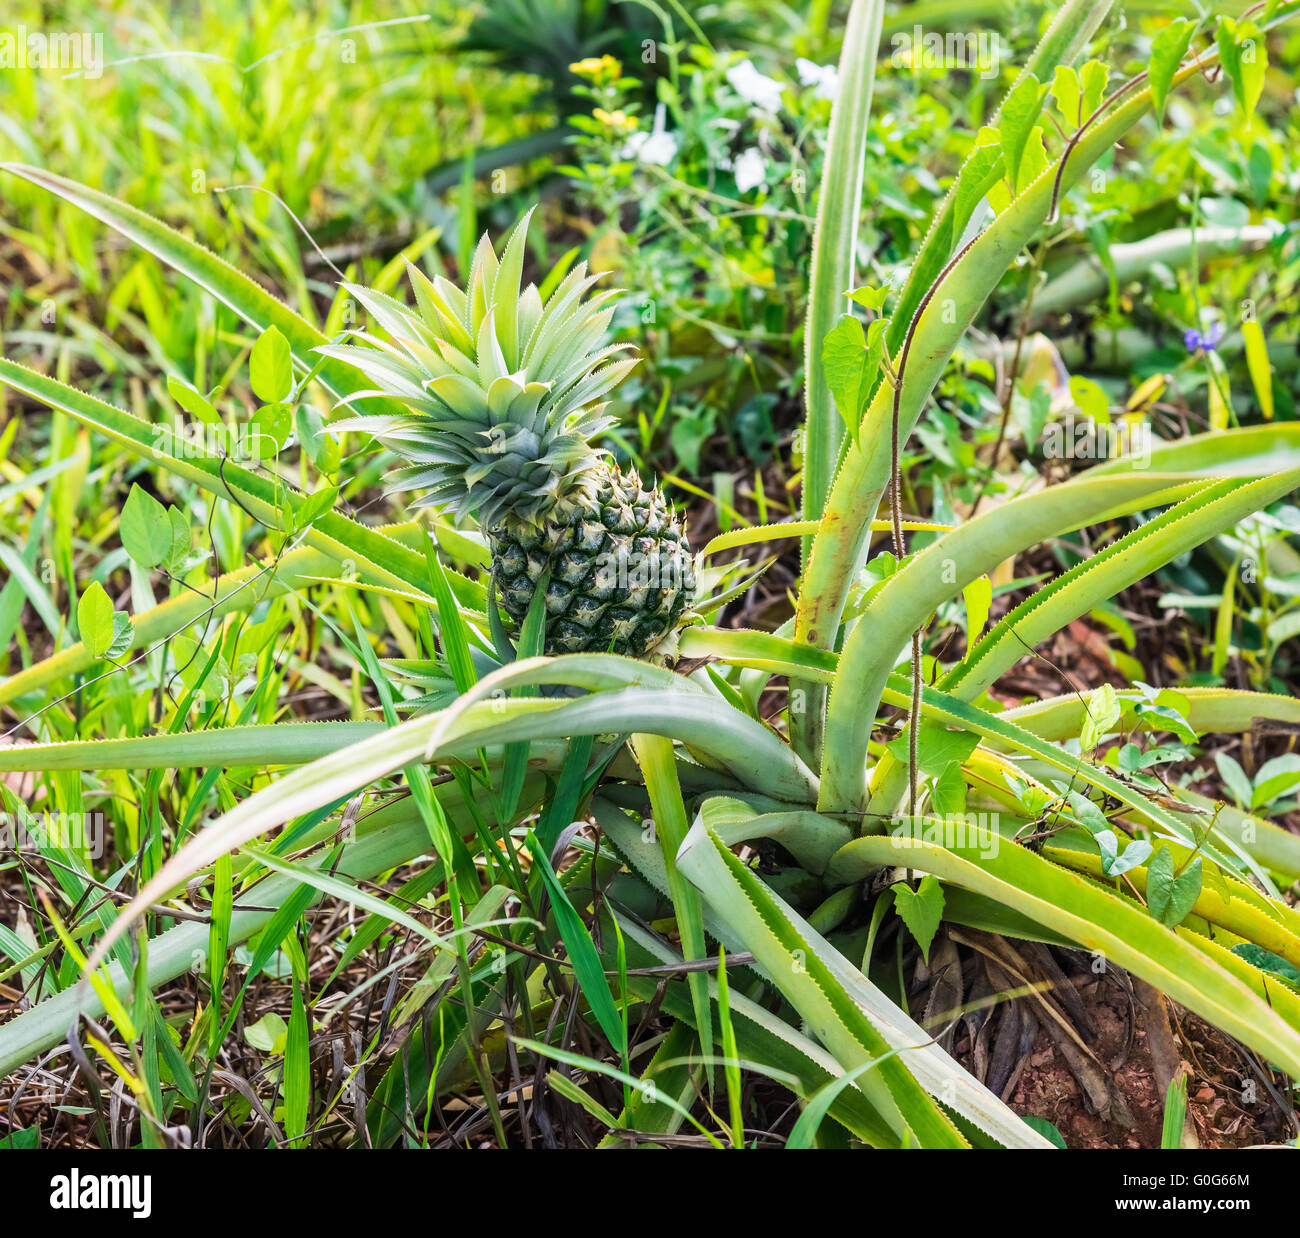 Pineapple growing field Stock Photo